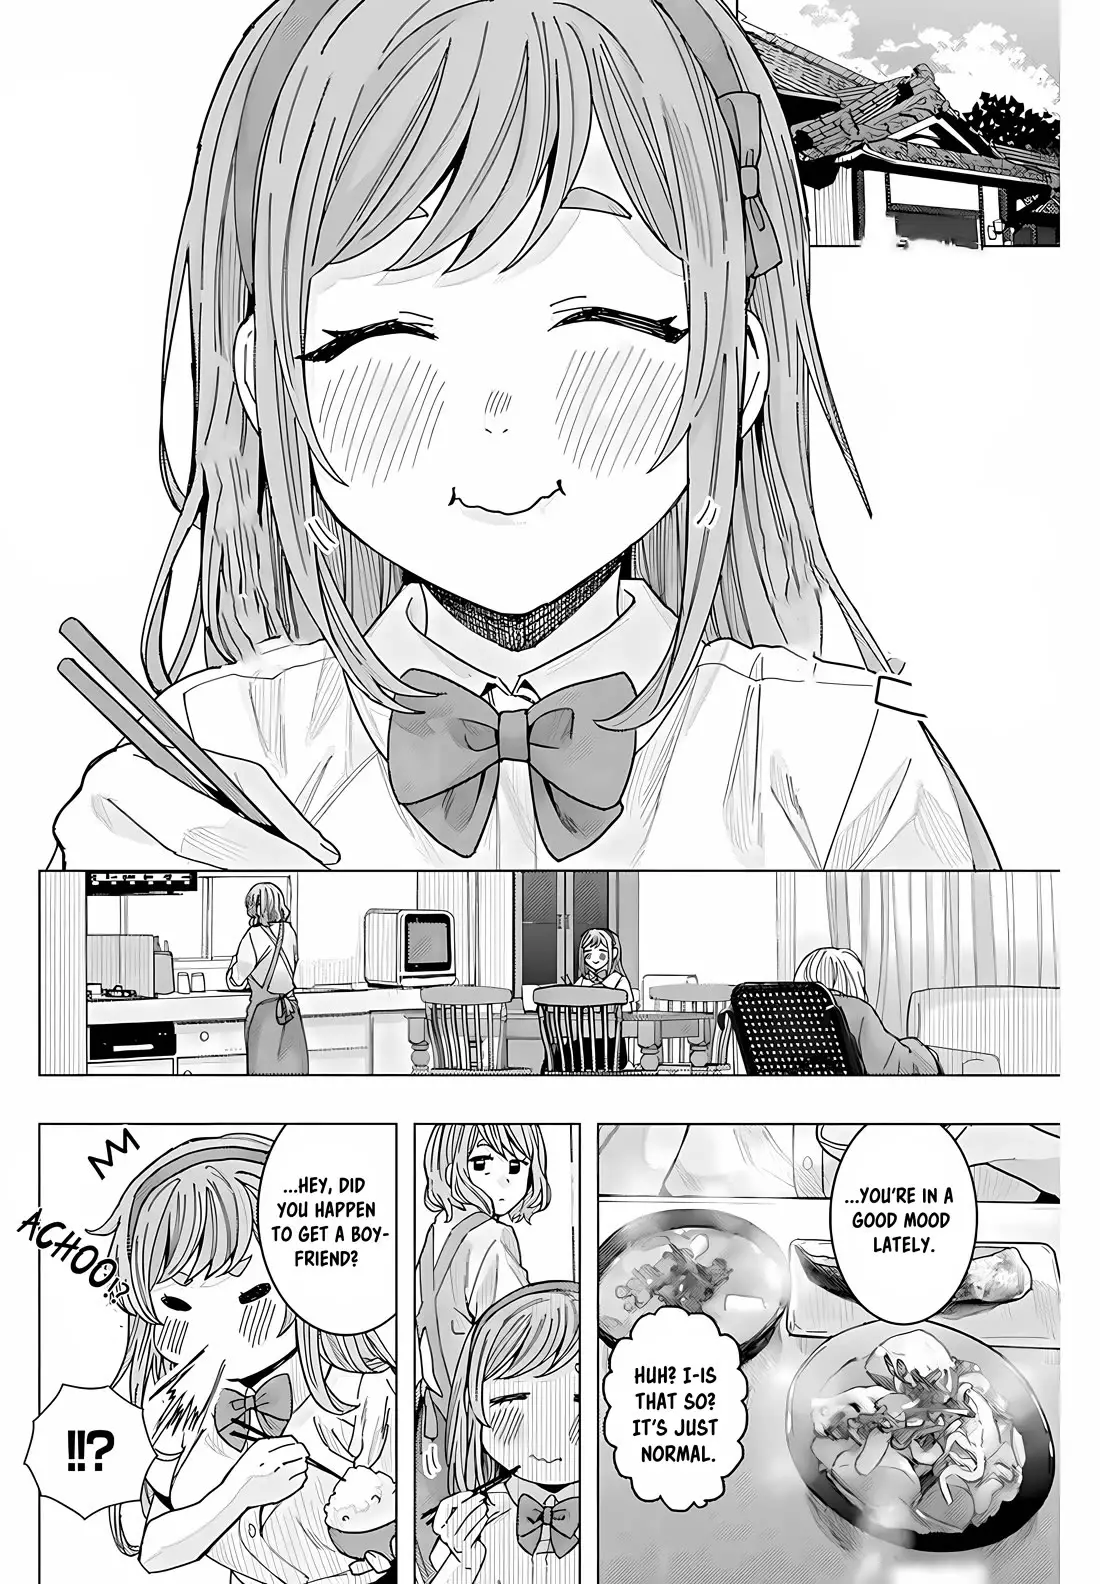 "nobukuni-San" Does She Like Me? - 28 page 5-8dd27fdd